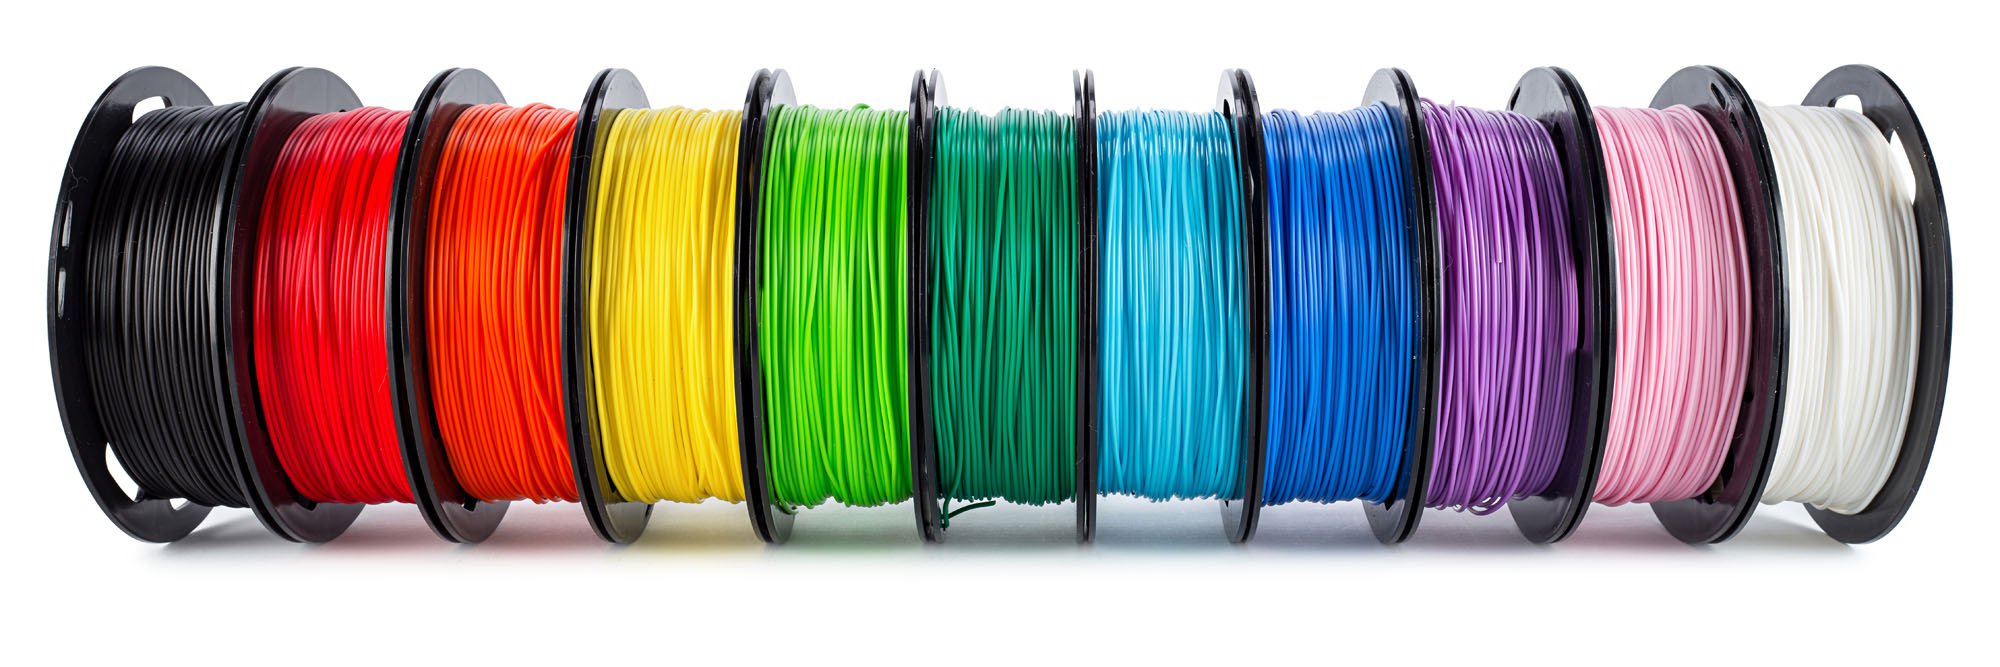 Filamenty standardowe do drukarki 3D